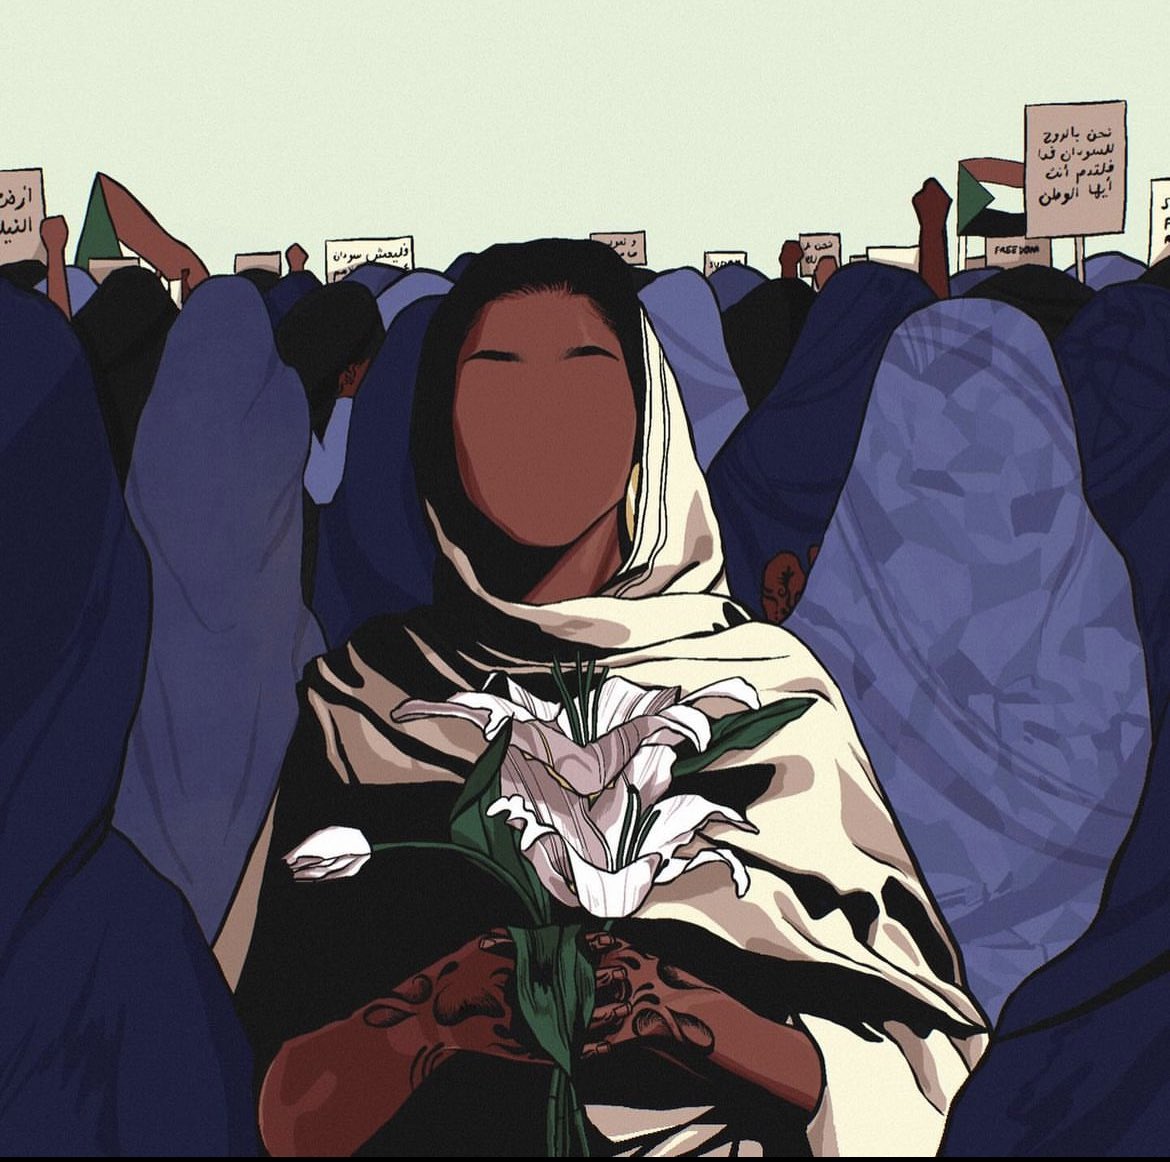 linktr.ee/TalkAboutSudan

#KeepEyesOnSudan

Graphics by @/illustratedbyaya